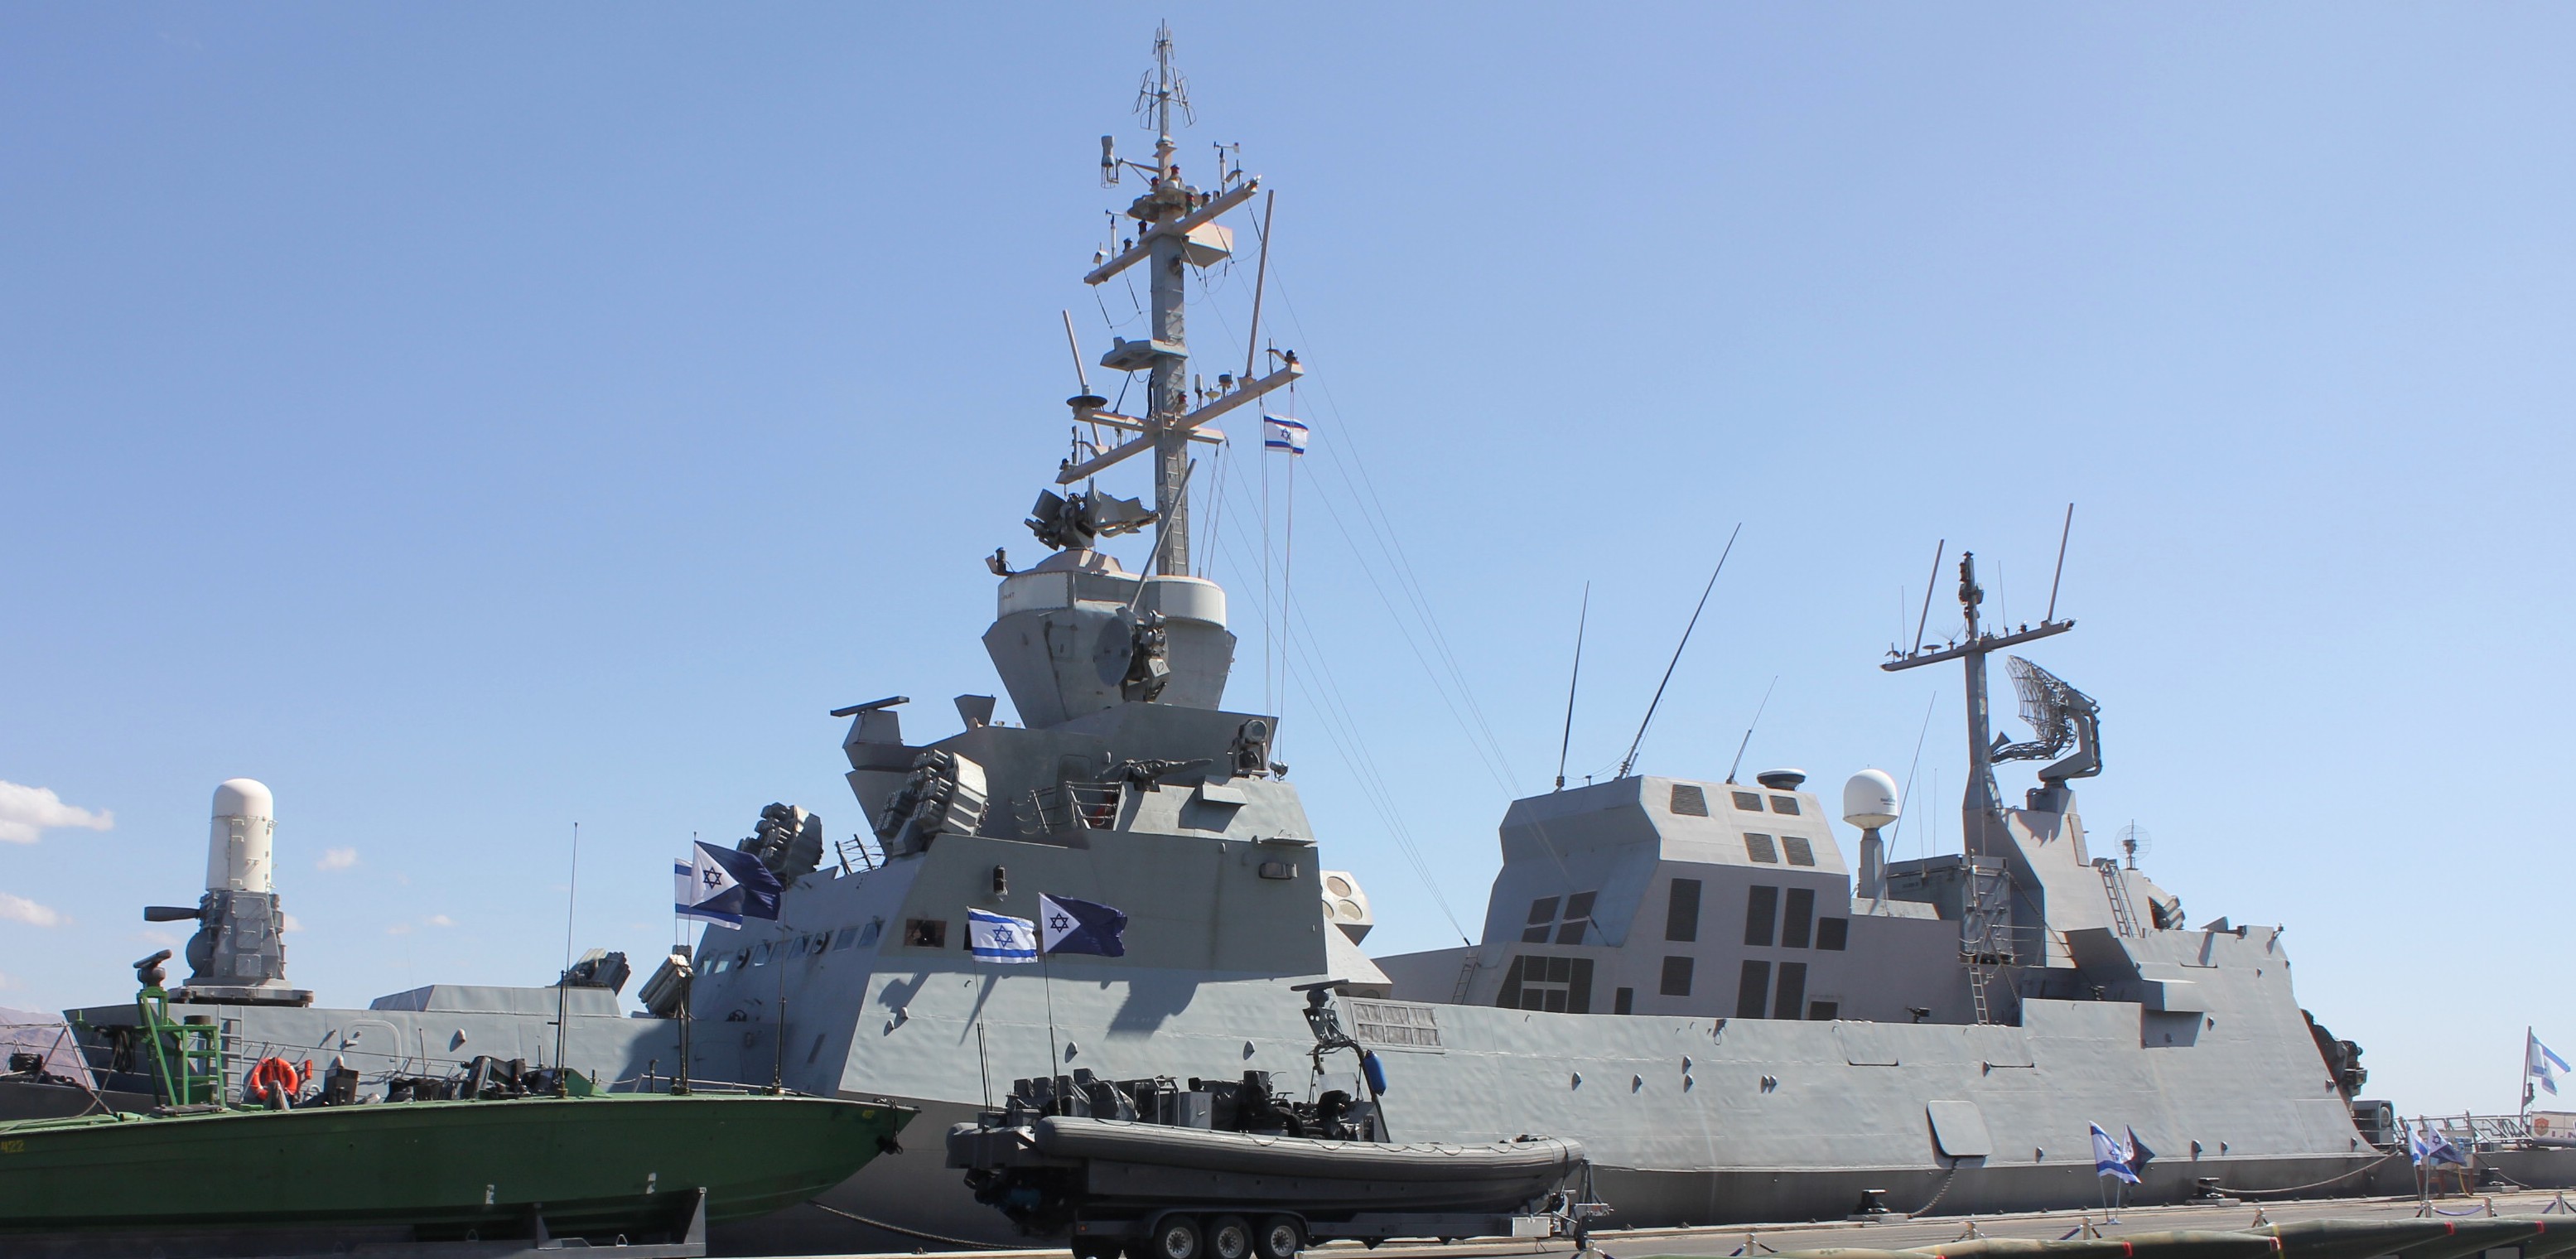 sa'ar 5 class missile corvette israeli navy heil hayam ins eilat lahav hanit 08